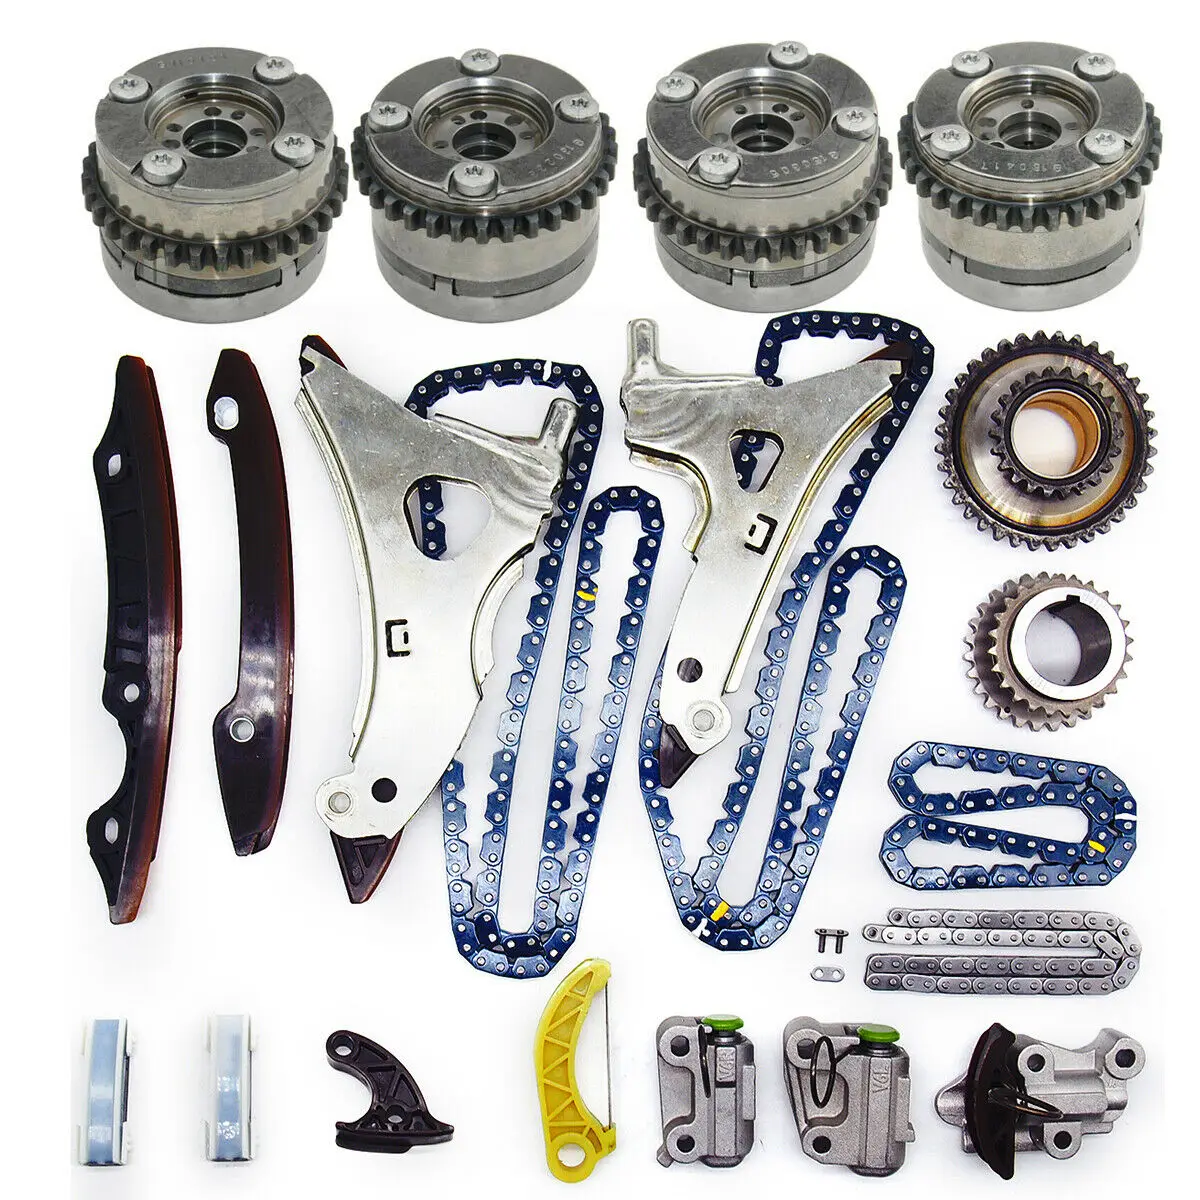 

factory Timing Chain Kit Camshaft Adjuster for Mercedes Benz M278 4.7L V8 Turbo CLS500 E500 S550 SL550